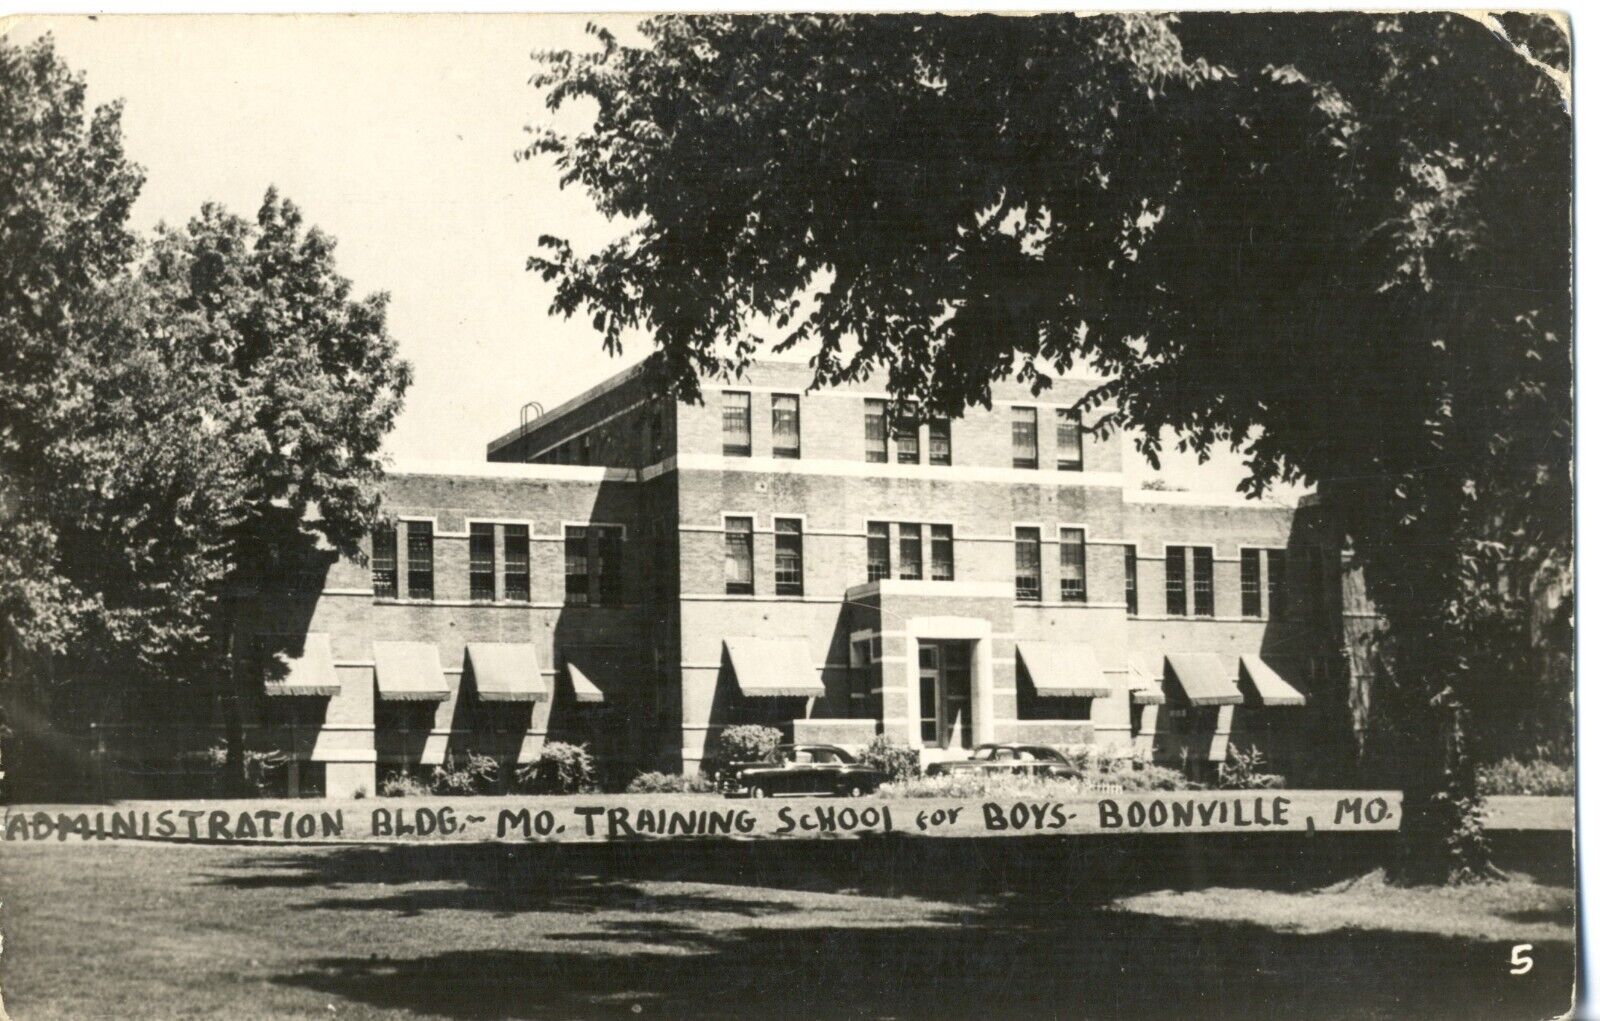 Administration Bldg, Training School for Boys, Boonville, Mo. Missouri Card #5